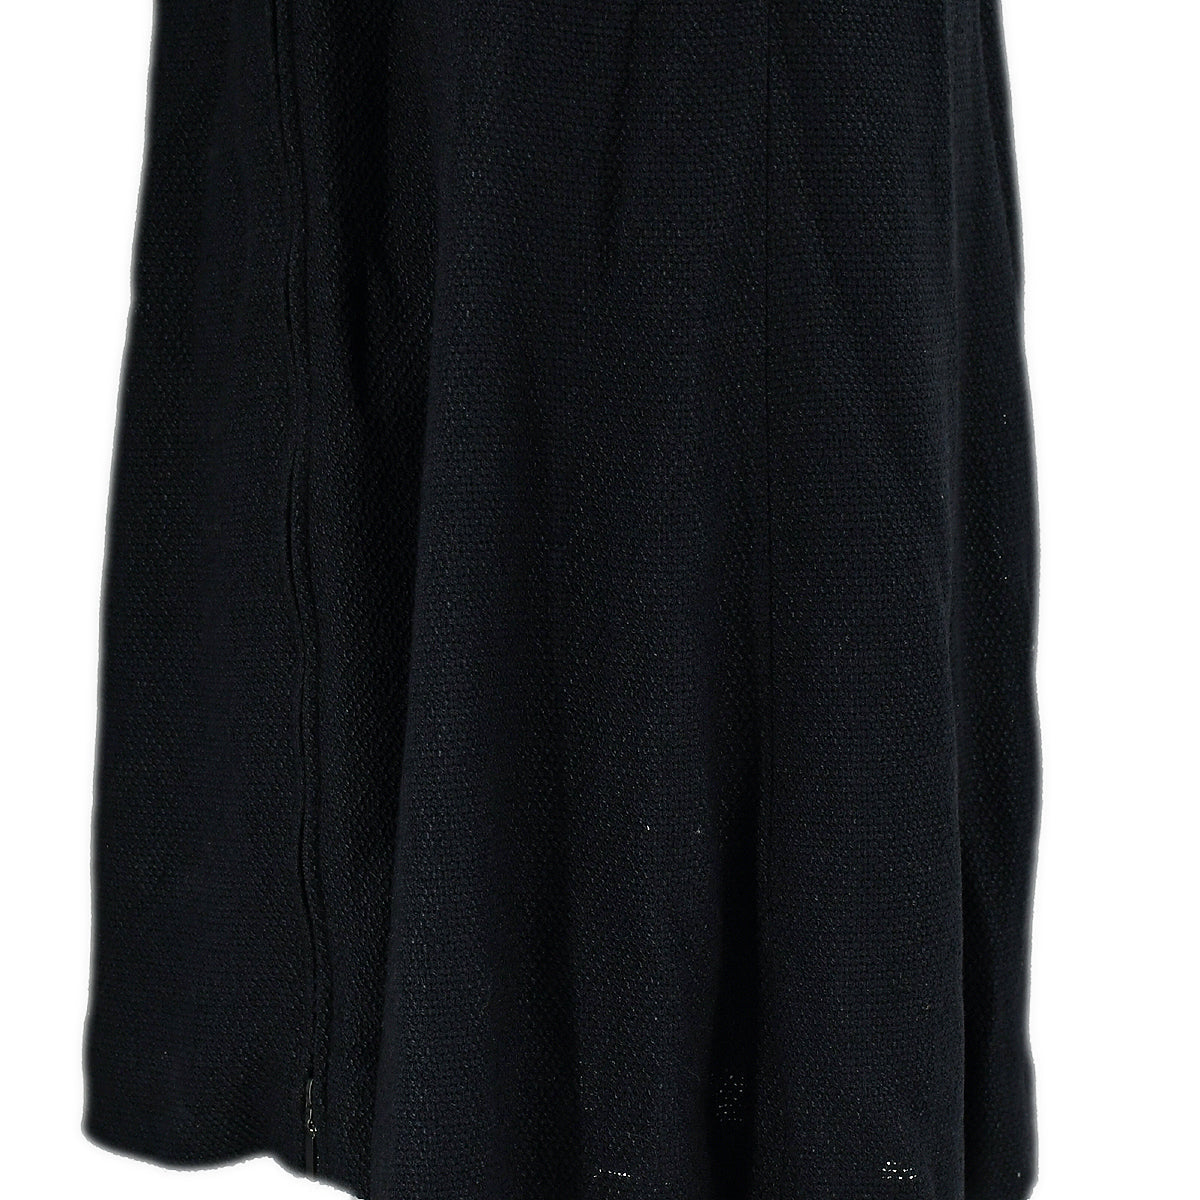 Chanel Zip Up Sleeveless Dress Black 03P 